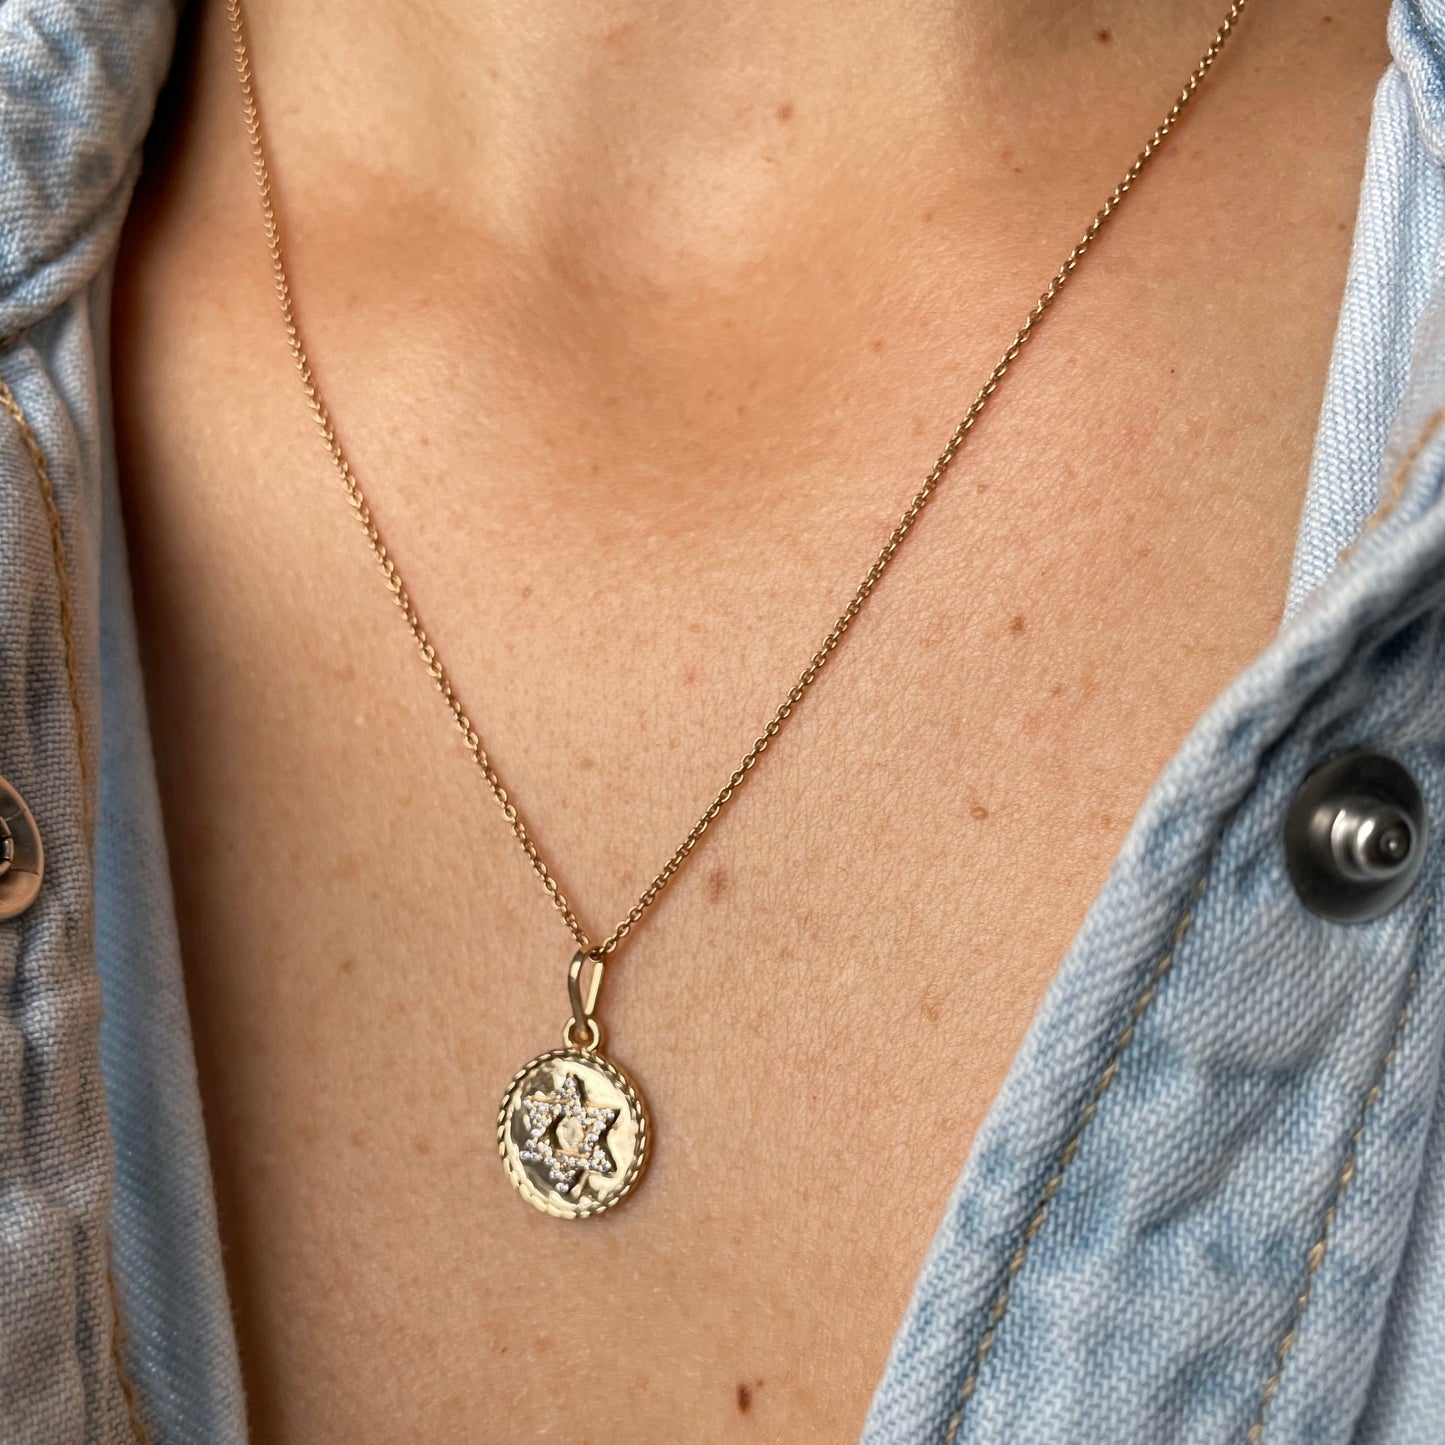 Reversible Star of David Pendant/ Necklace - - Jewelry - Goldie Paris Jewelry - Evil Eye Pendant